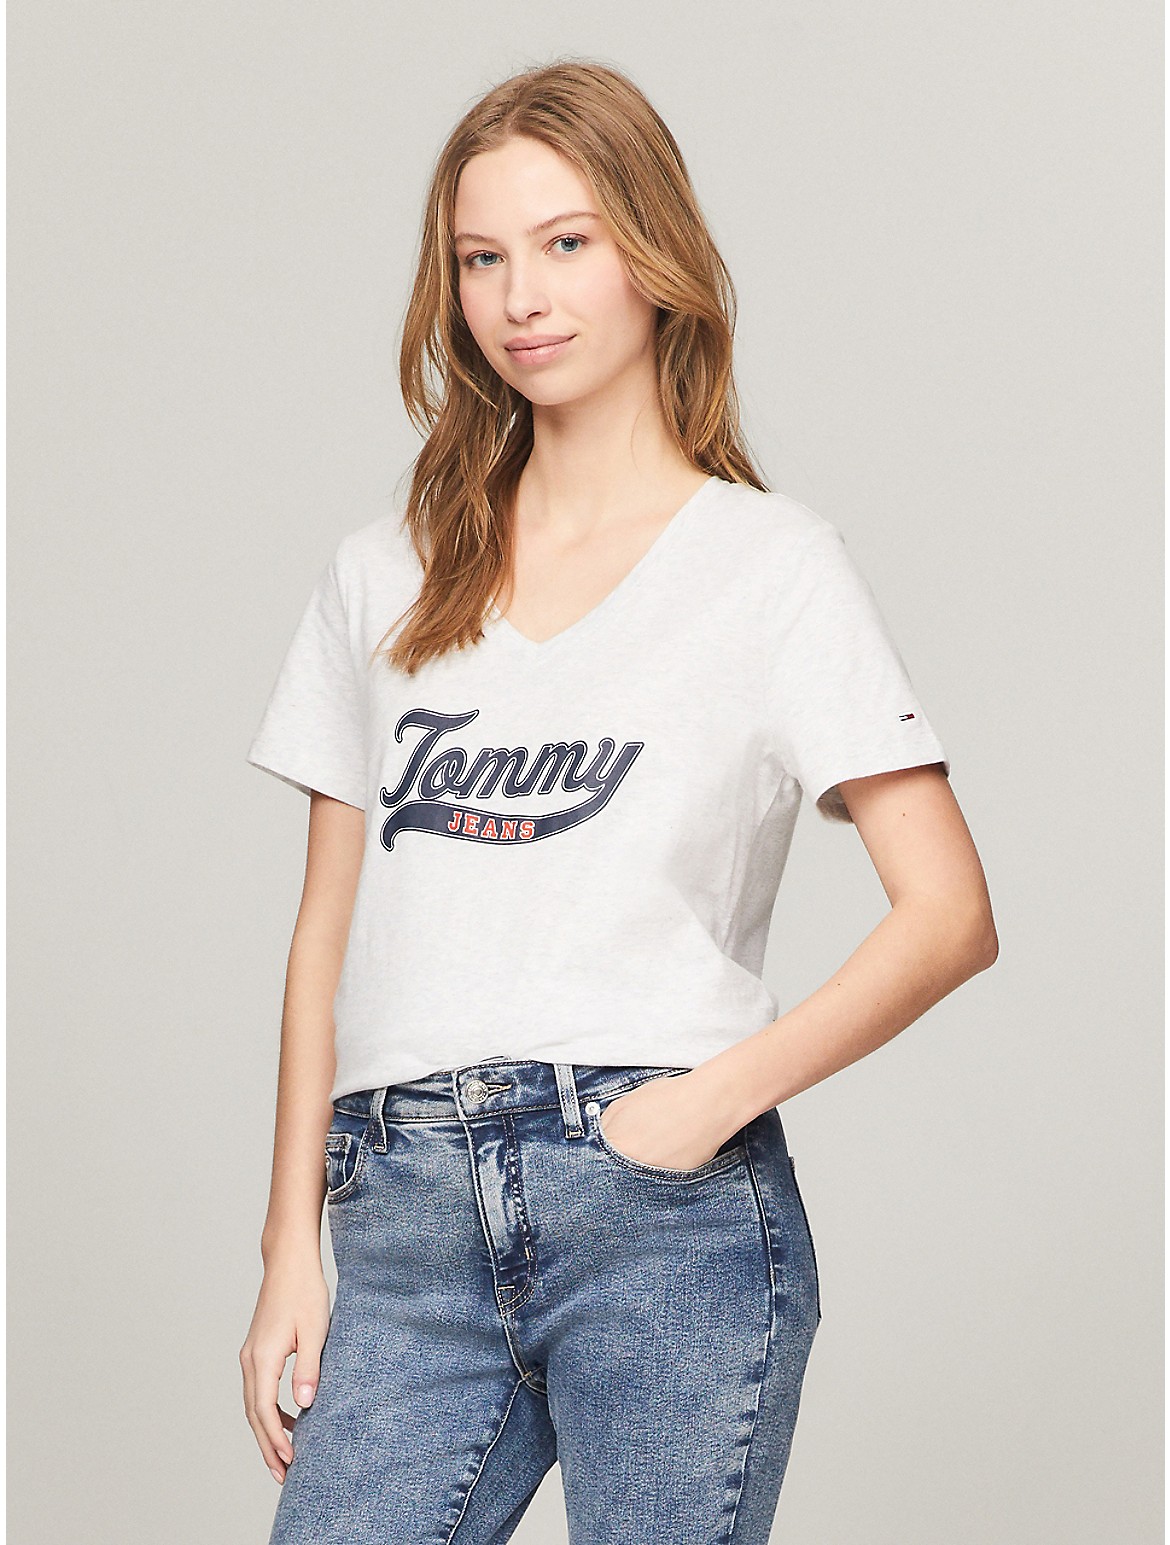 Tommy Hilfiger Women's Tommy Logo V-Neck T-Shirt